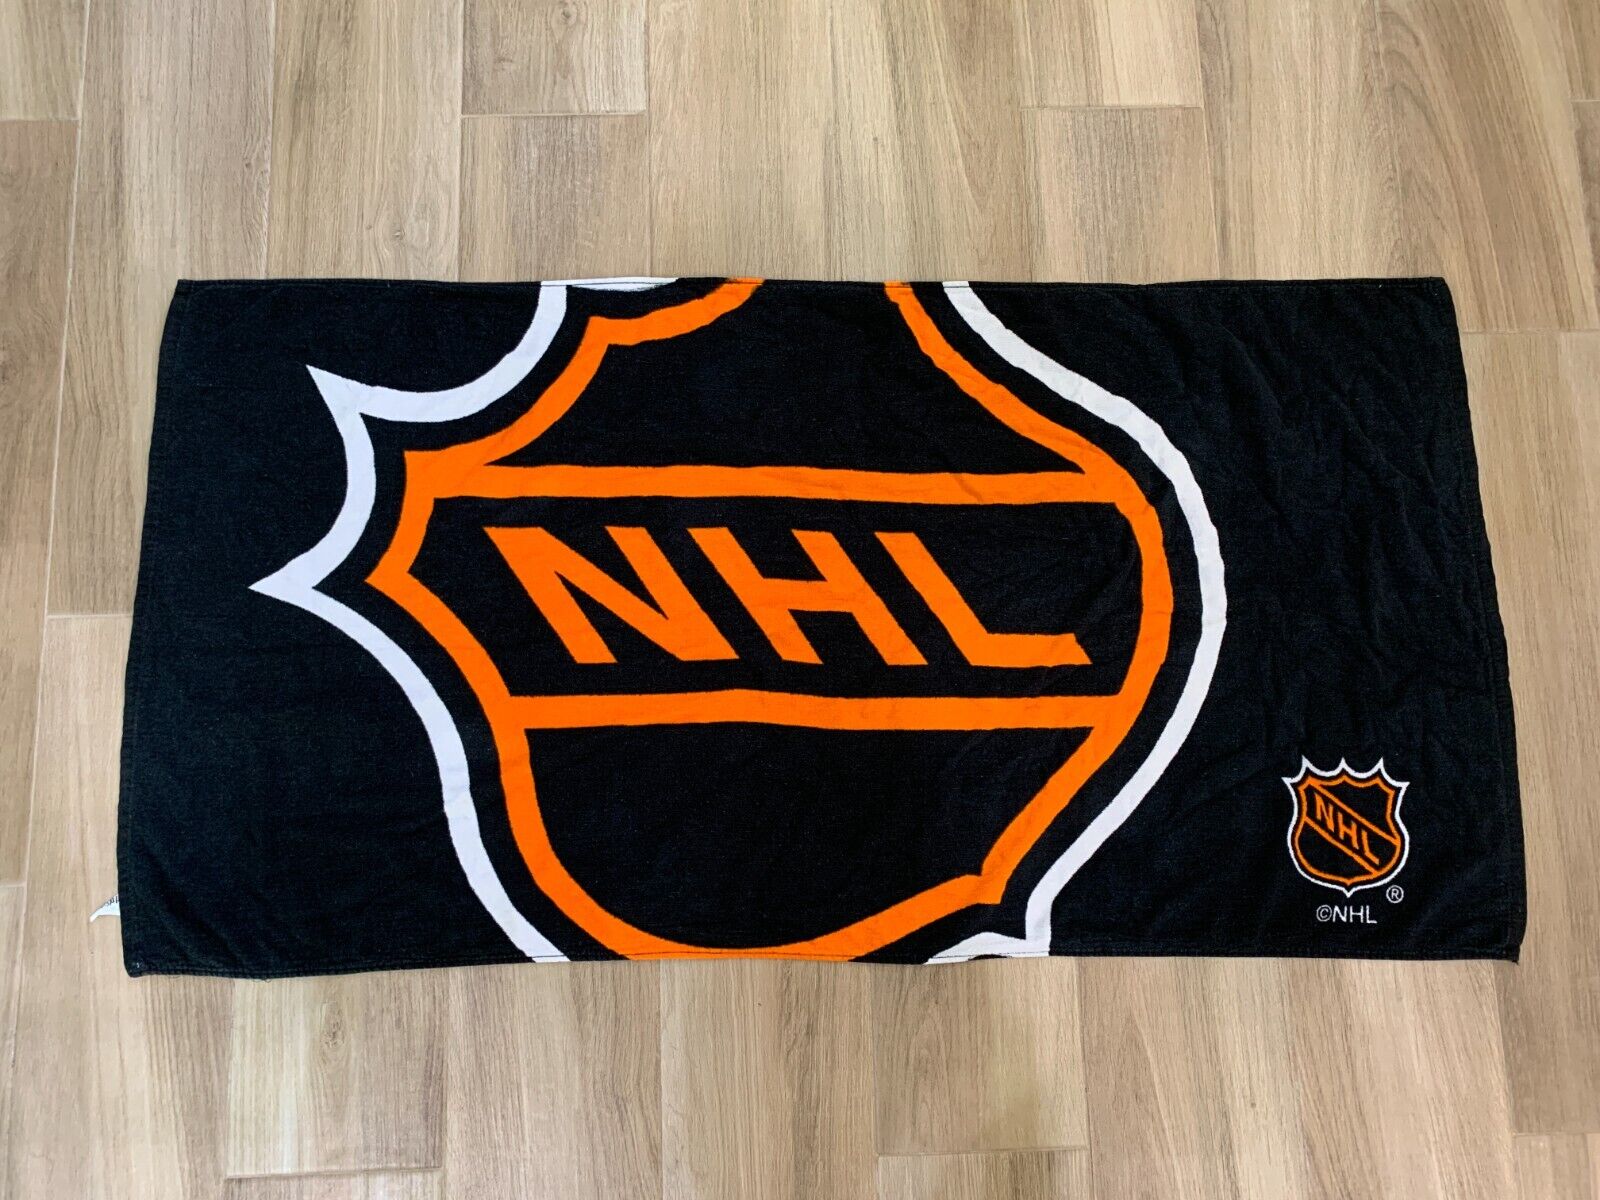 Vintage NHL Beach Bath Towel Rectangle 51x29 Black Orange Cotton Hockey Y2K VGUC